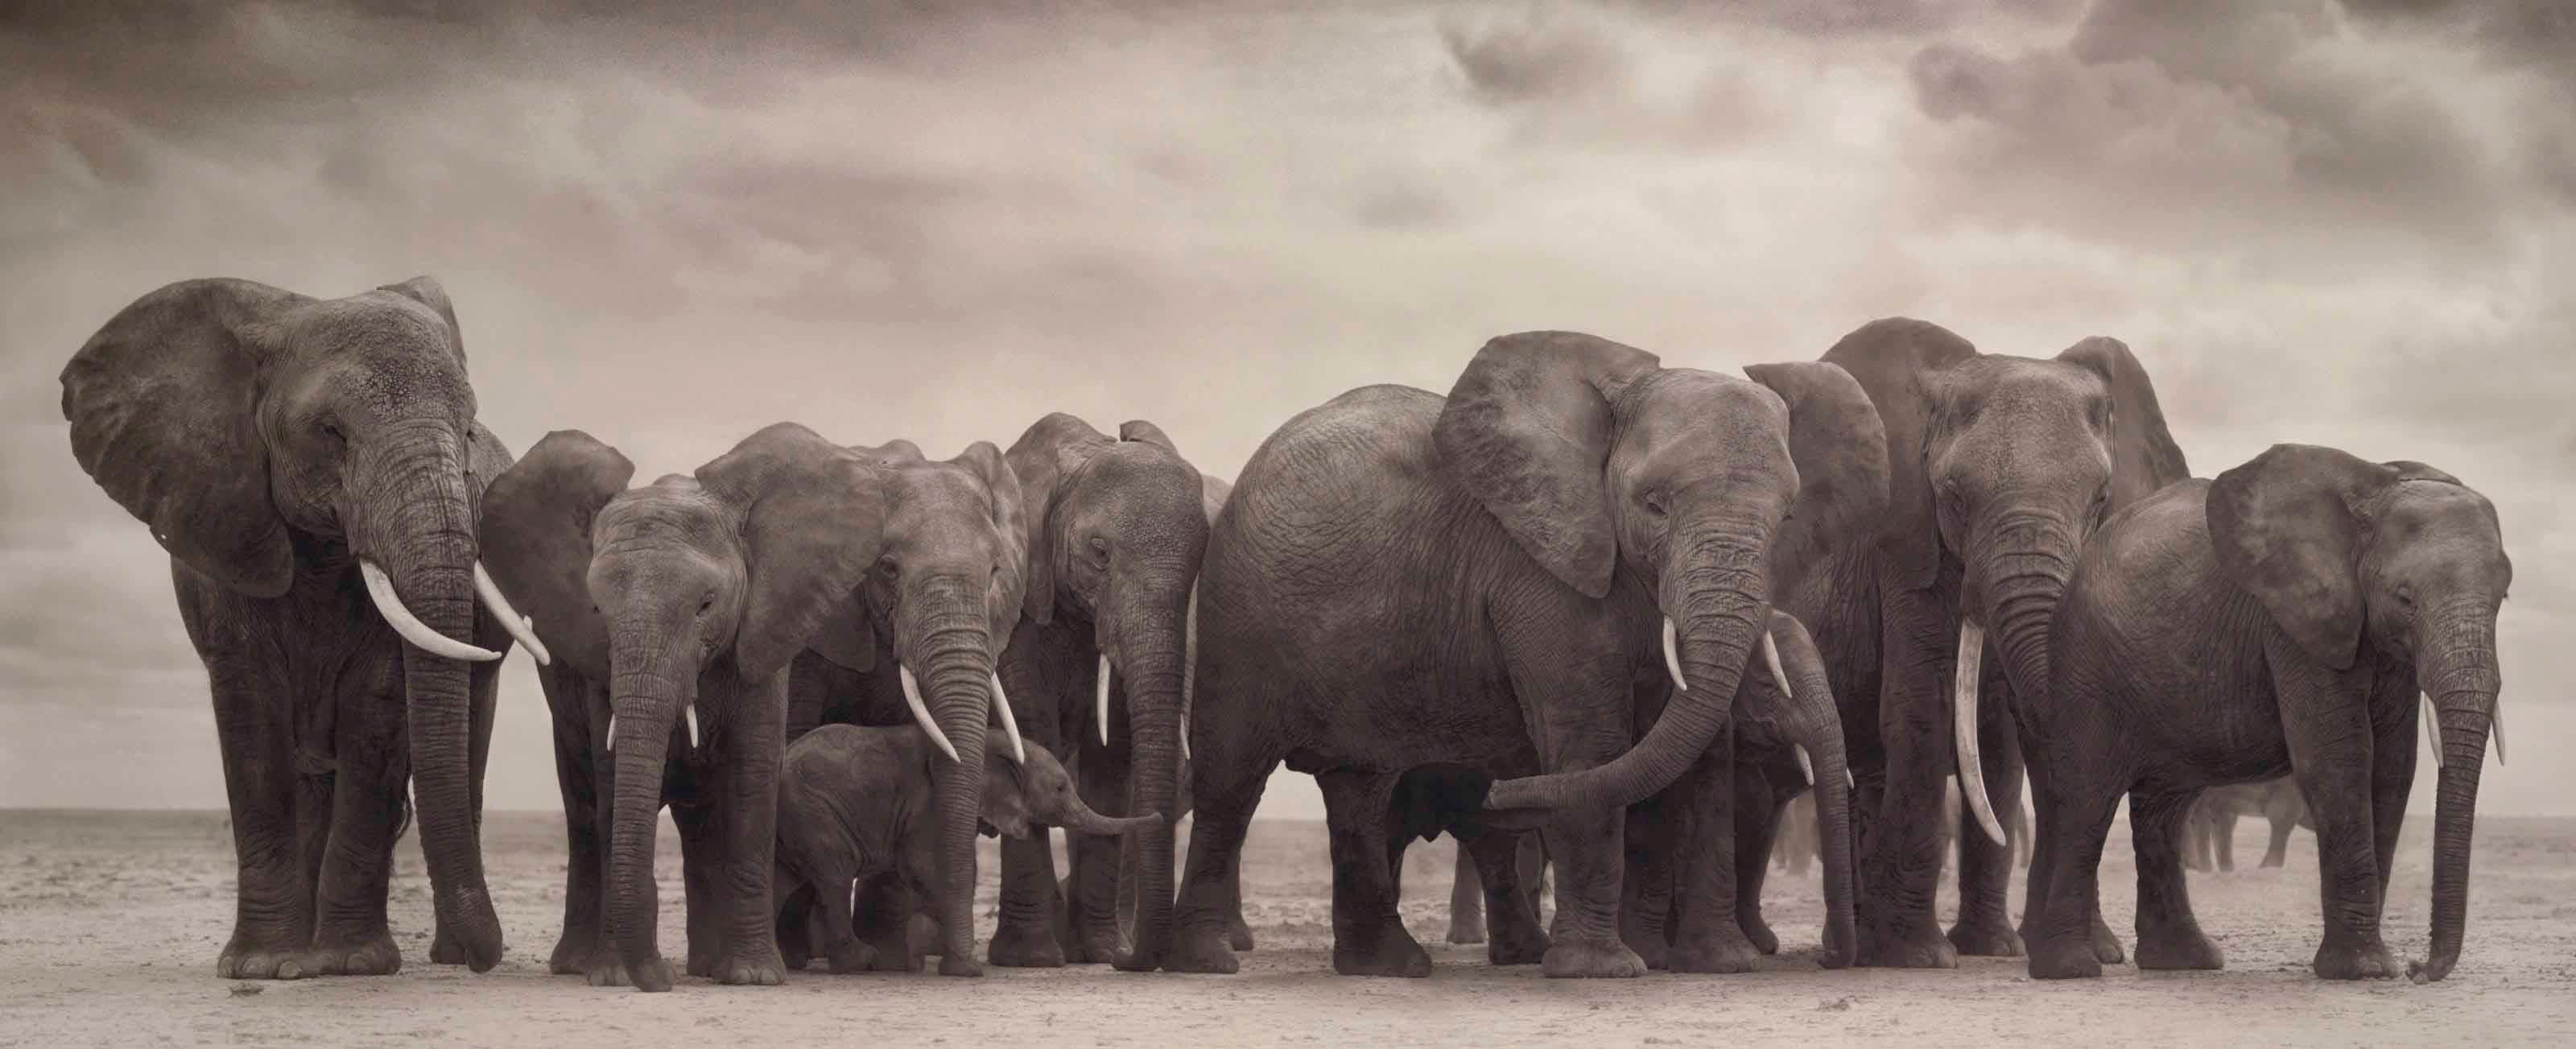 Elephant Group on Bare Earth, Amboseli– Nick Brandt, Africa, Animal, Elephant